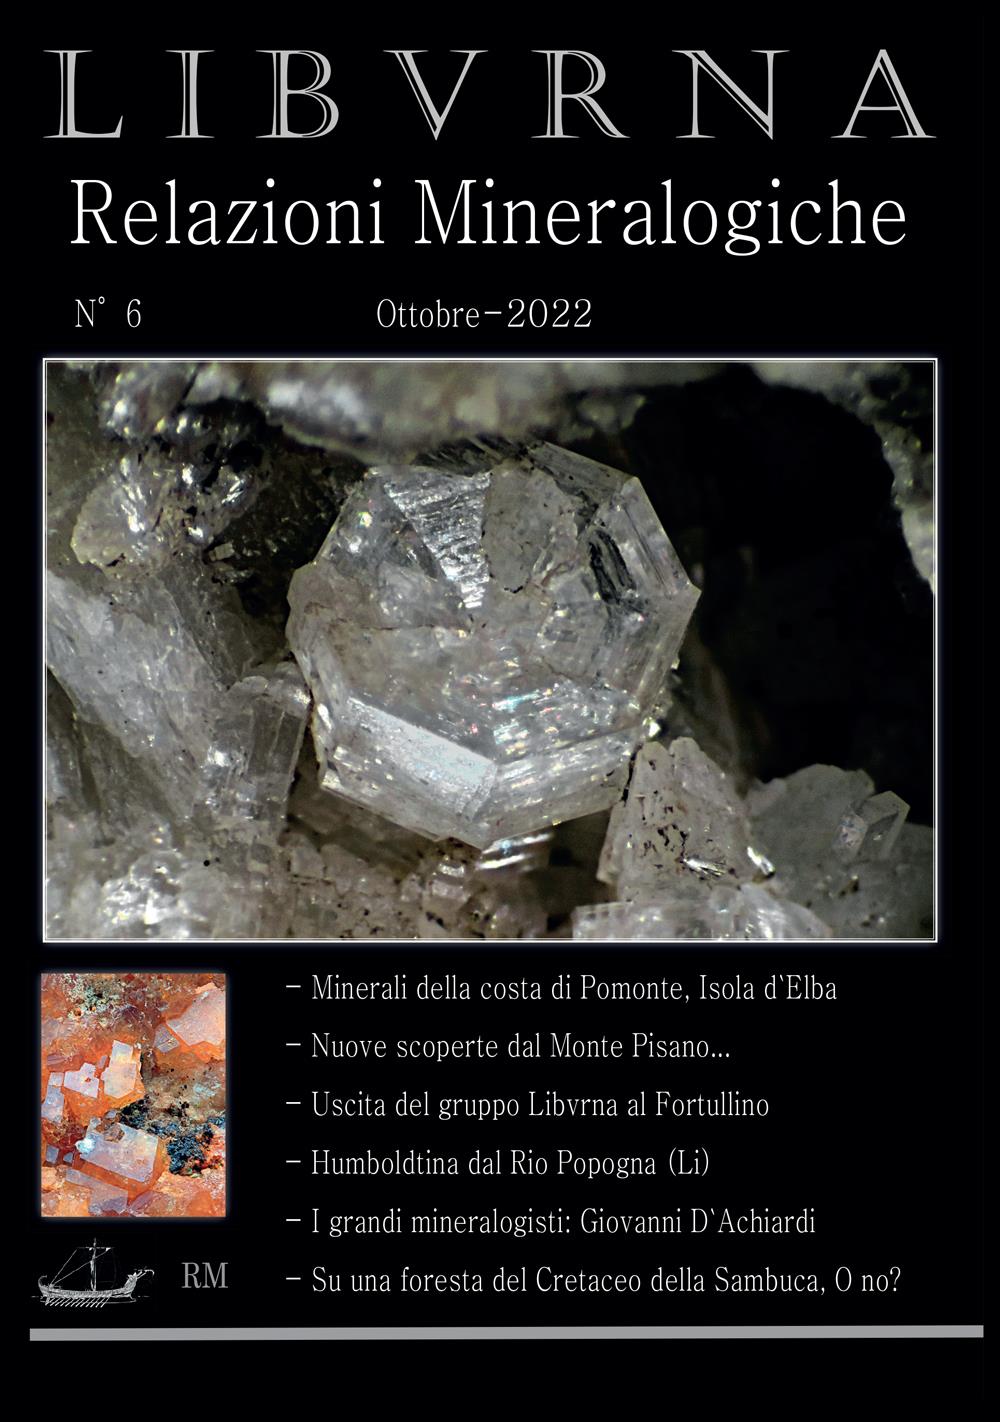 Libvrna N° 6 - Relazioni Mineralogiche - Ottobre 2022